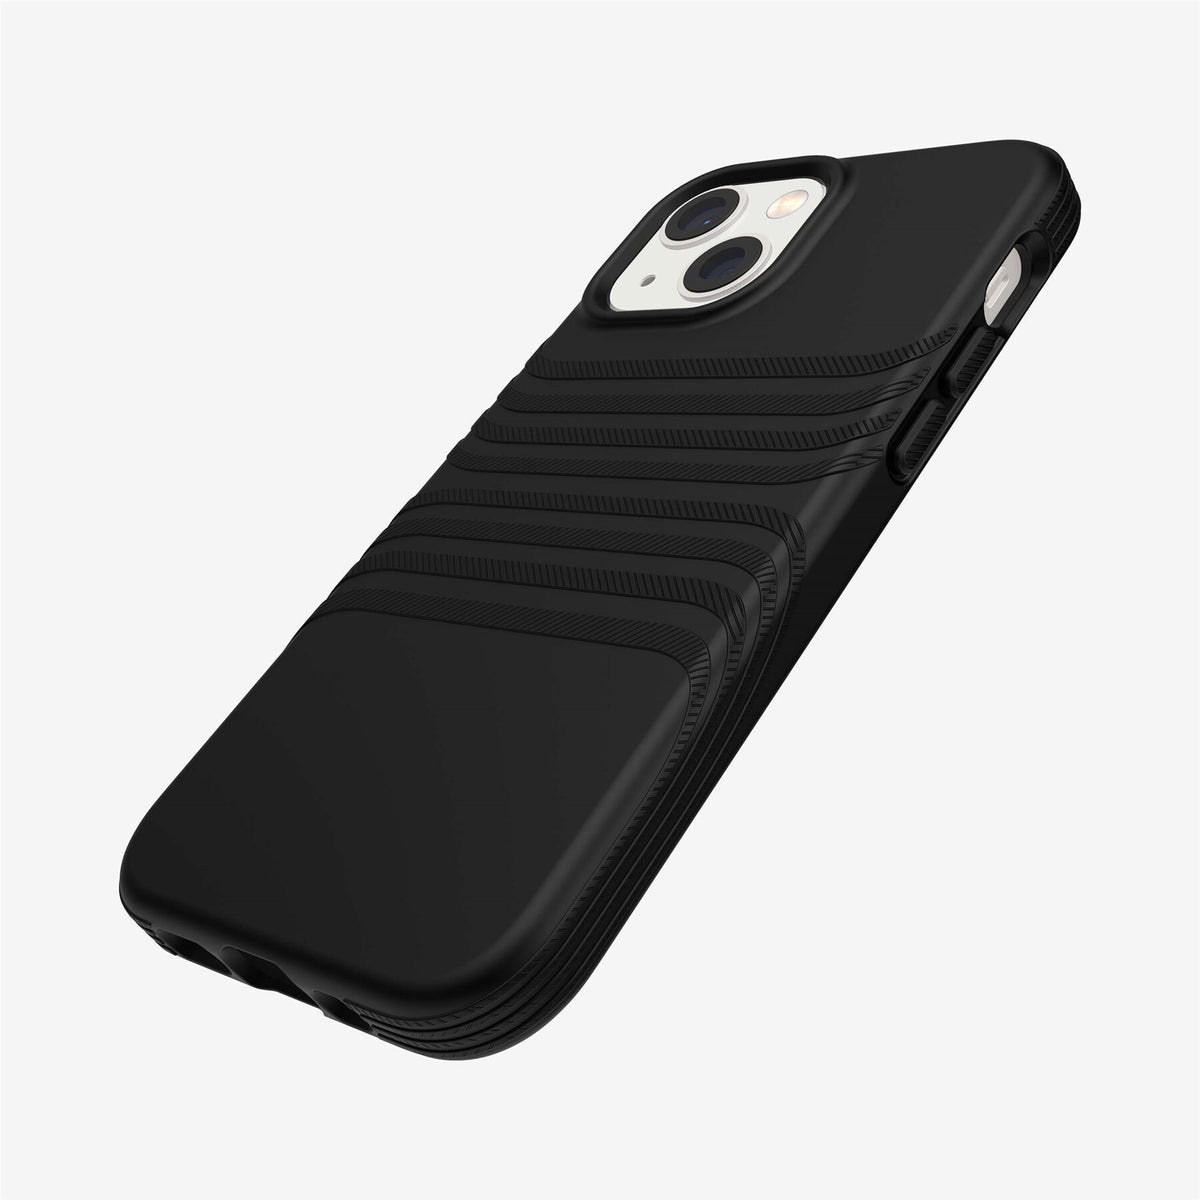 Tech21 Evo Tactile for iPhone 13 mini in Black